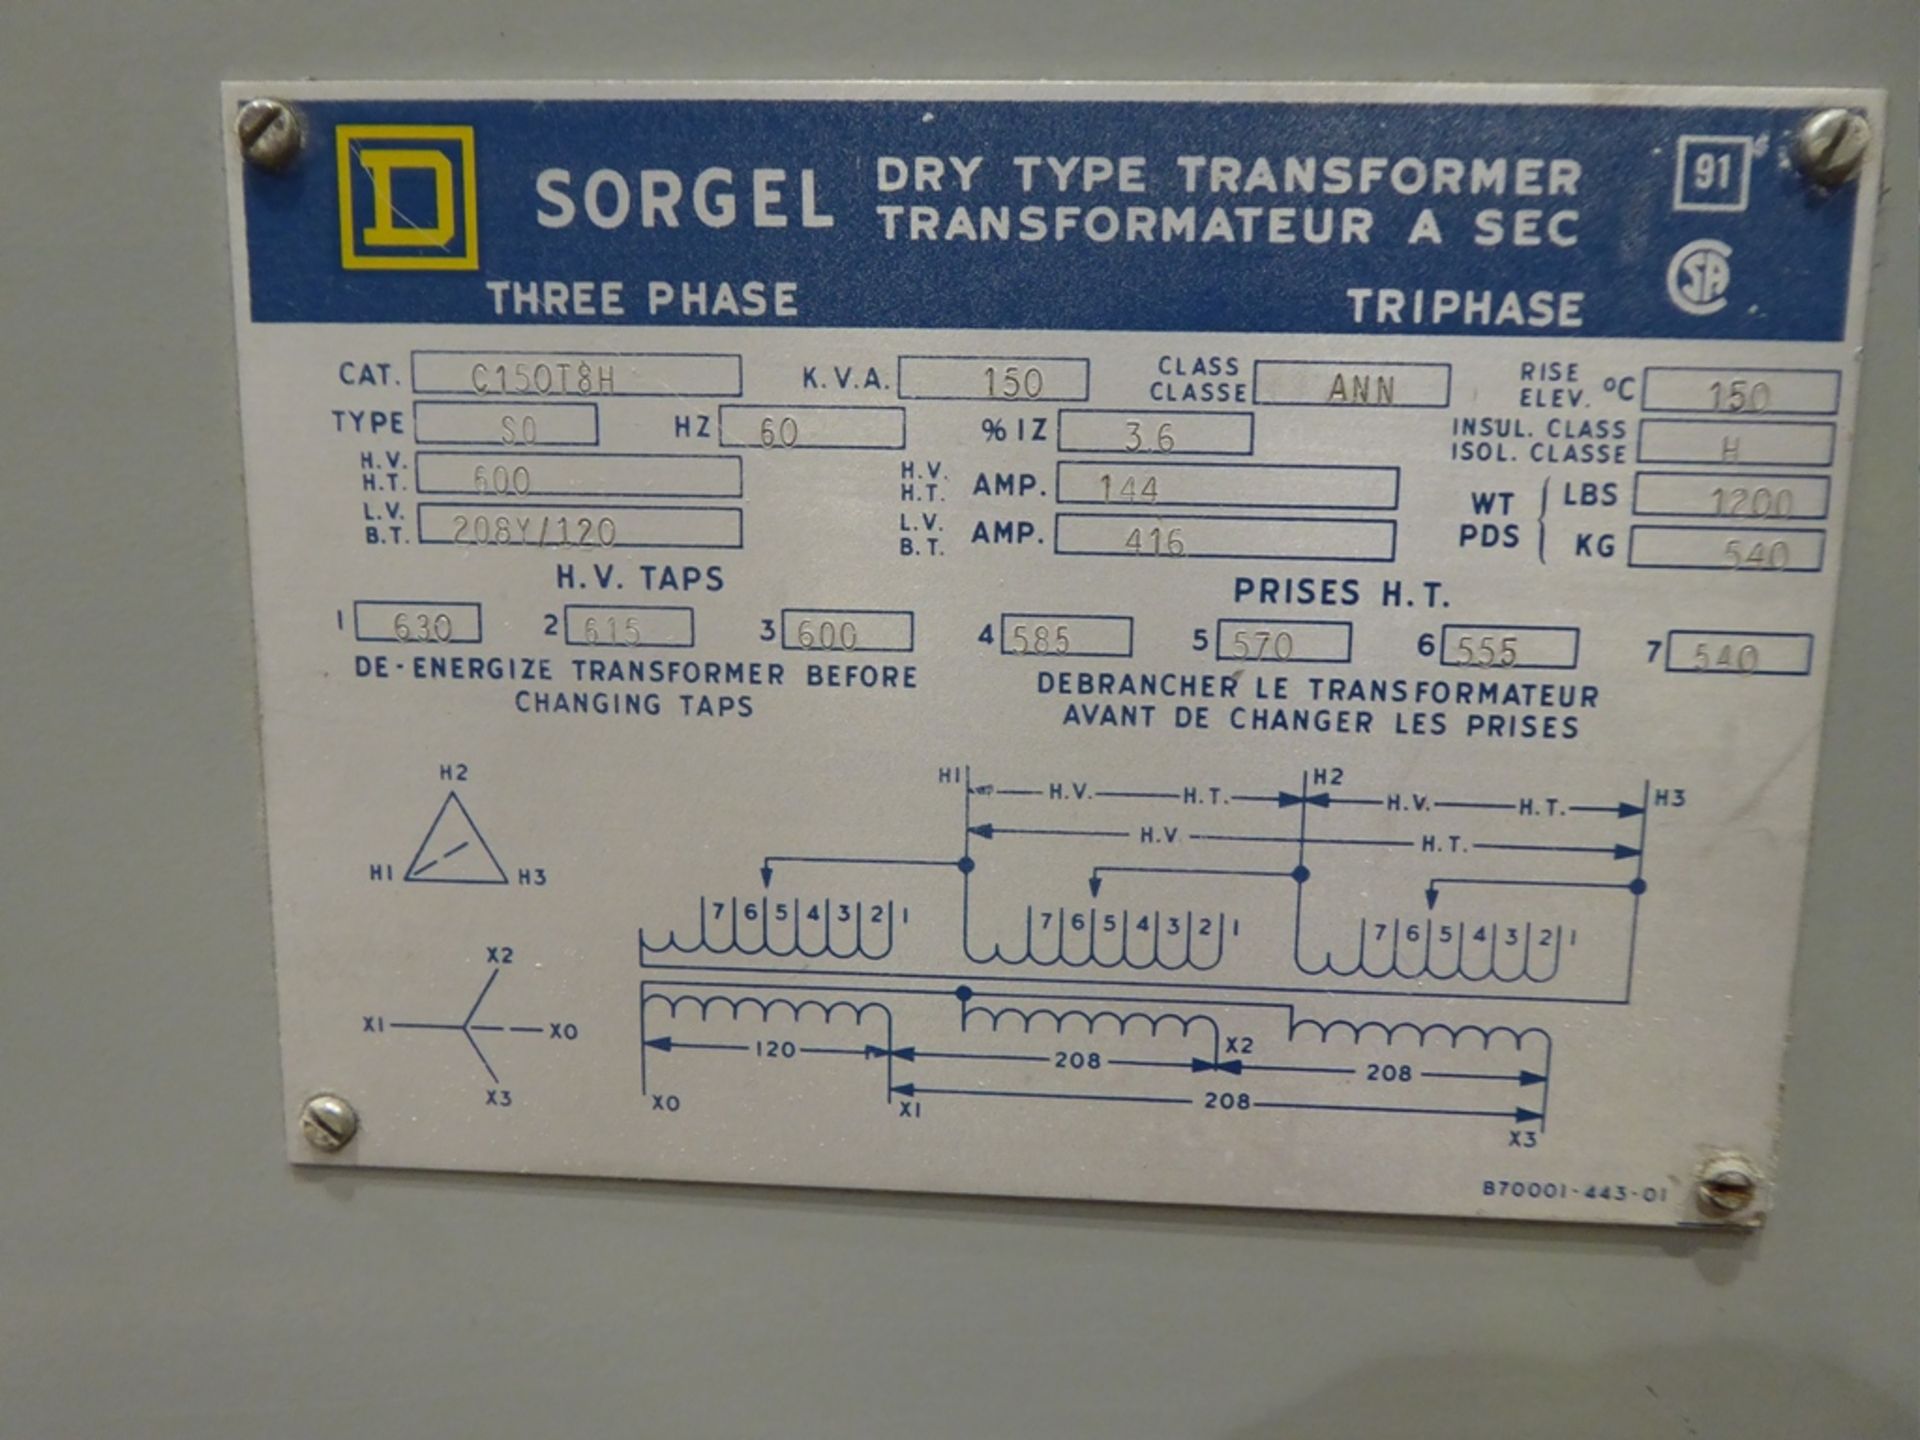 SQUARE D SORGEL DRY TYPE TRANSFORMER 150KVA 600V 208/120V - Image 2 of 2